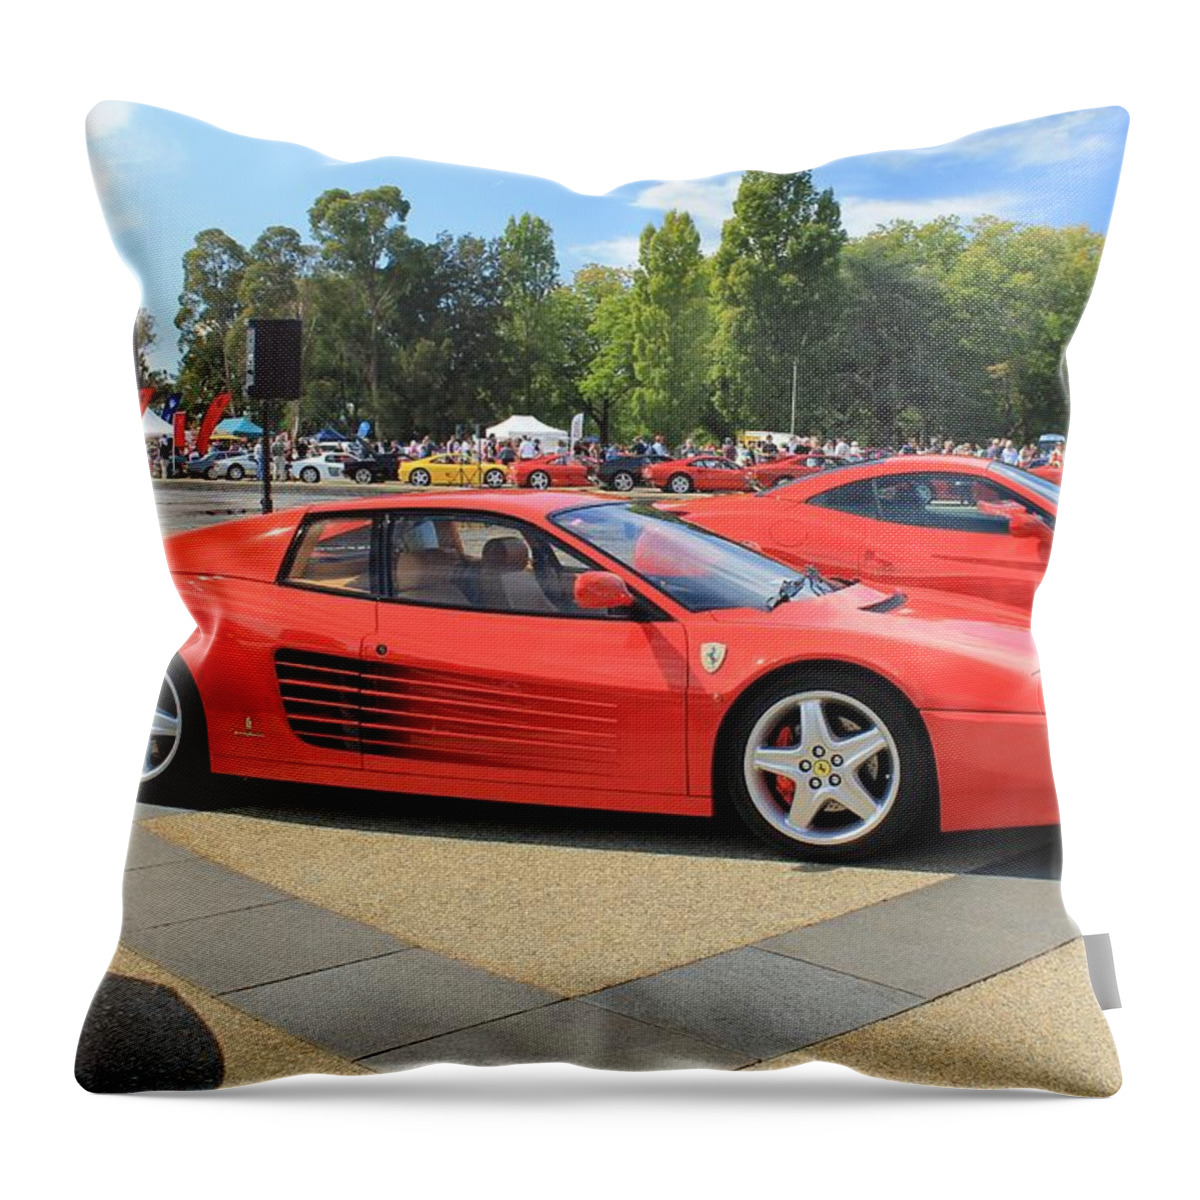 Ferrari Throw Pillow featuring the photograph Ferrari Testarossa by Anthony Croke